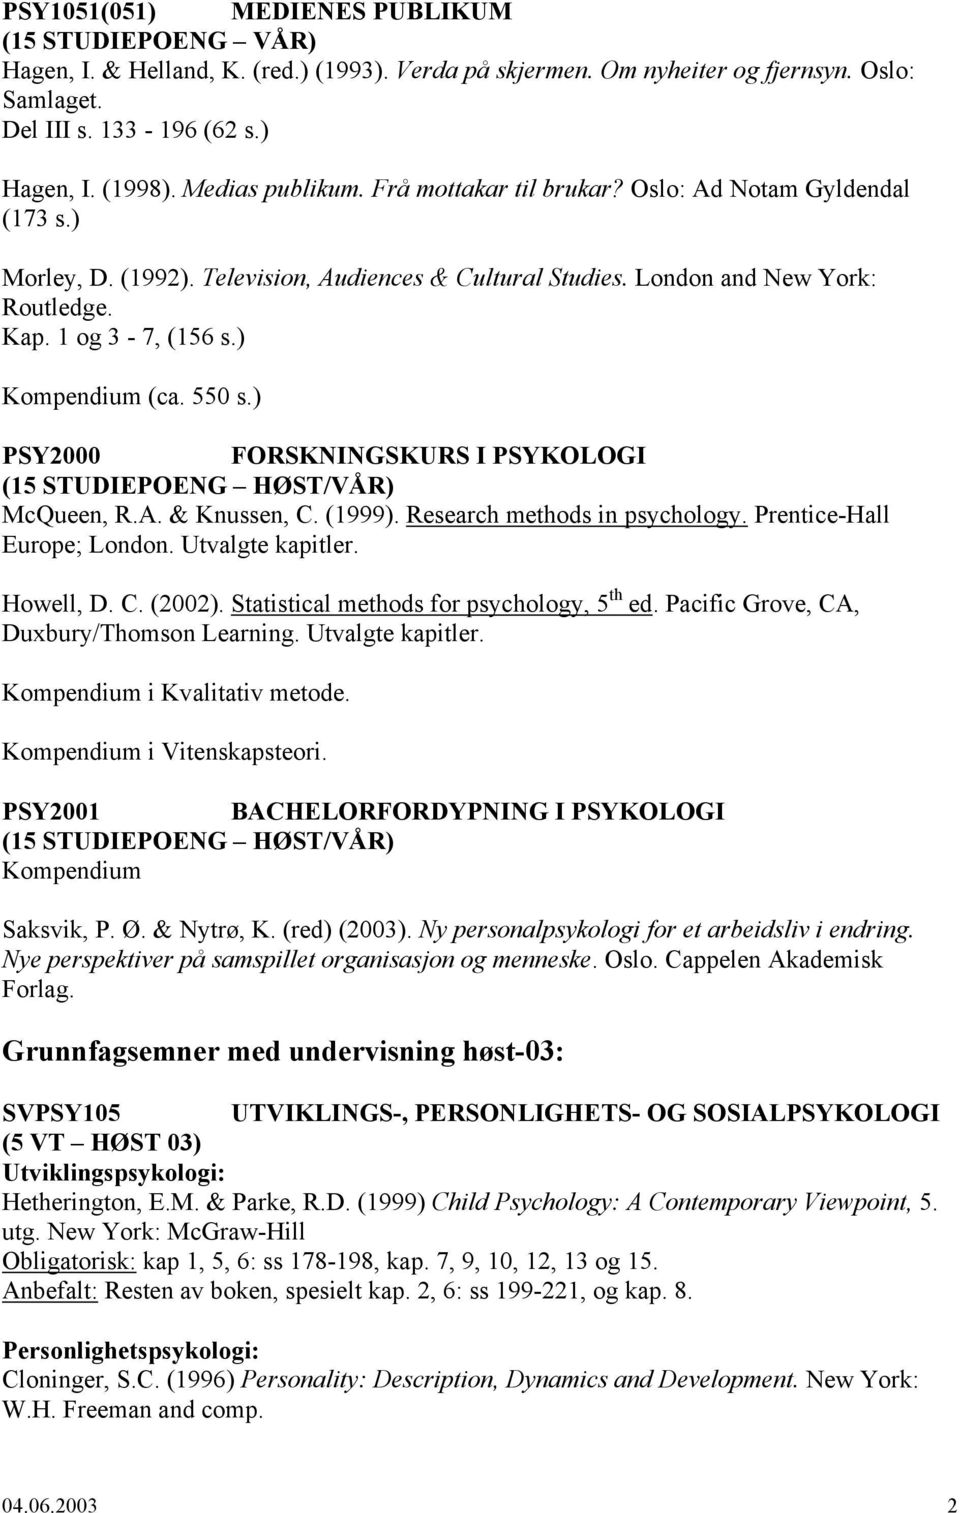 ) Kompendium (ca. 550 s.) PSY2000 FORSKNINGSKURS I PSYKOLOGI (15 STUDIEPOENG HØST/VÅR) McQueen, R.A. & Knussen, C. (1999). Research methods in psychology. Prentice-Hall Europe; London.